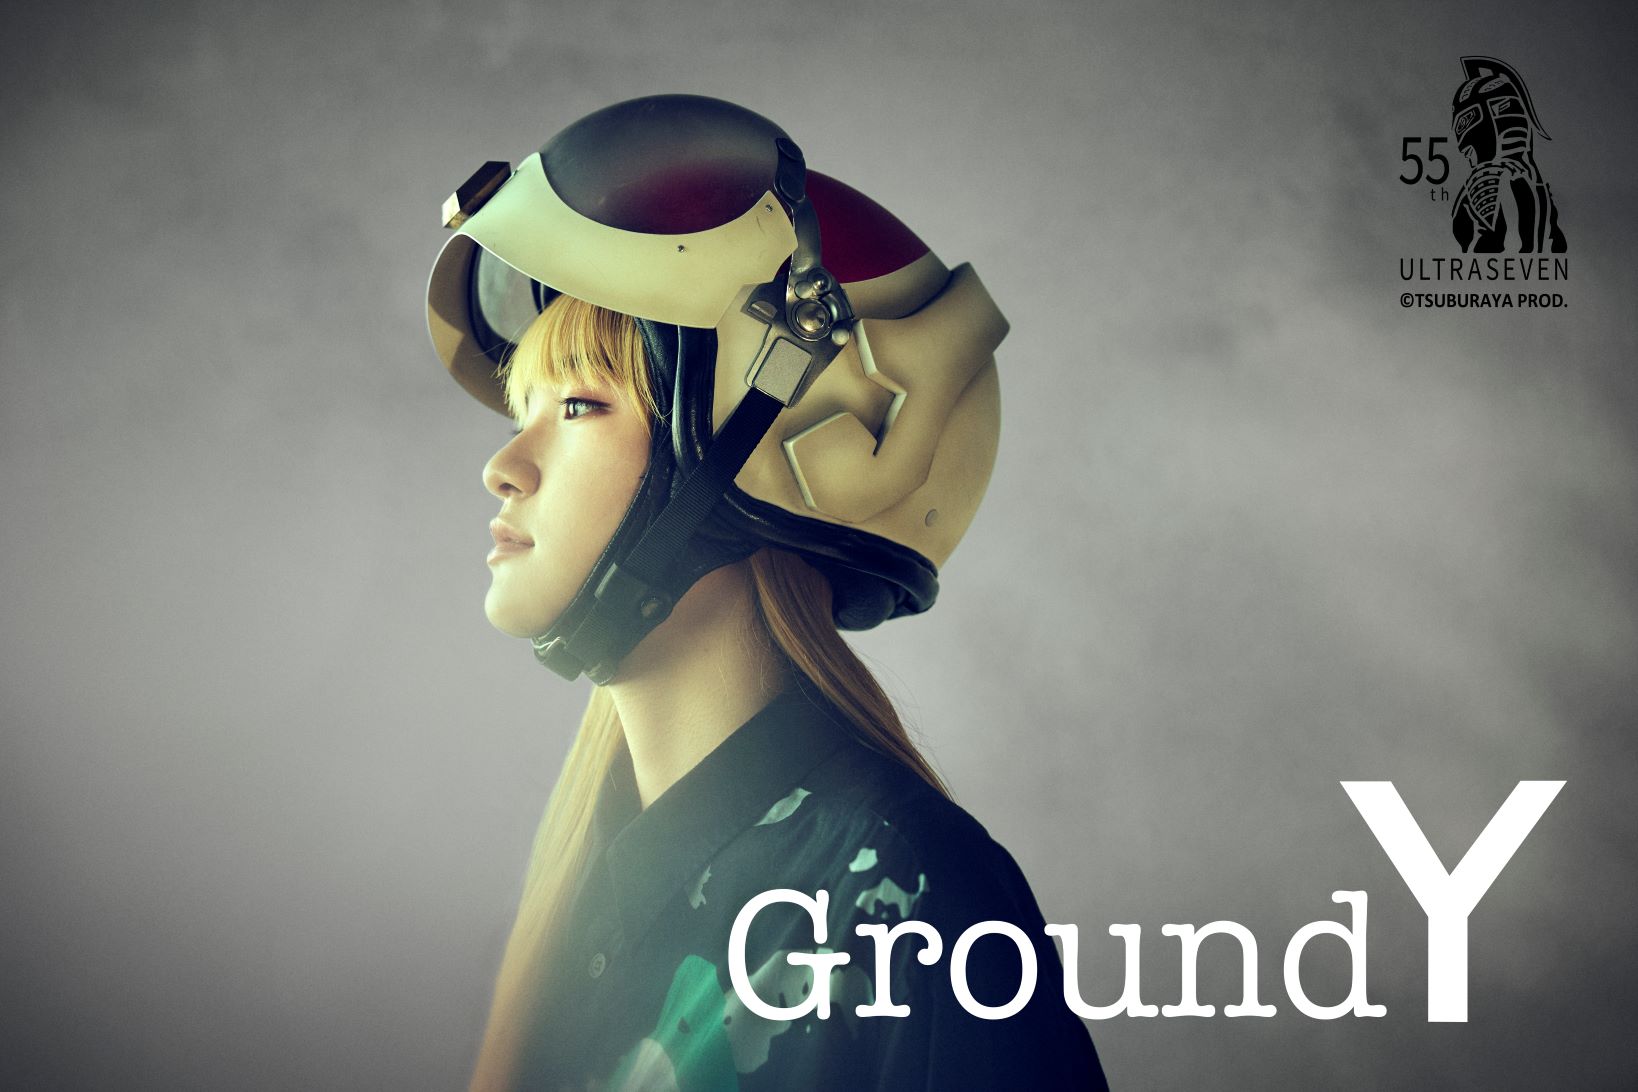 Ground Y ウルトラセブン Collaboration Collection | Yohji Yamamoto 